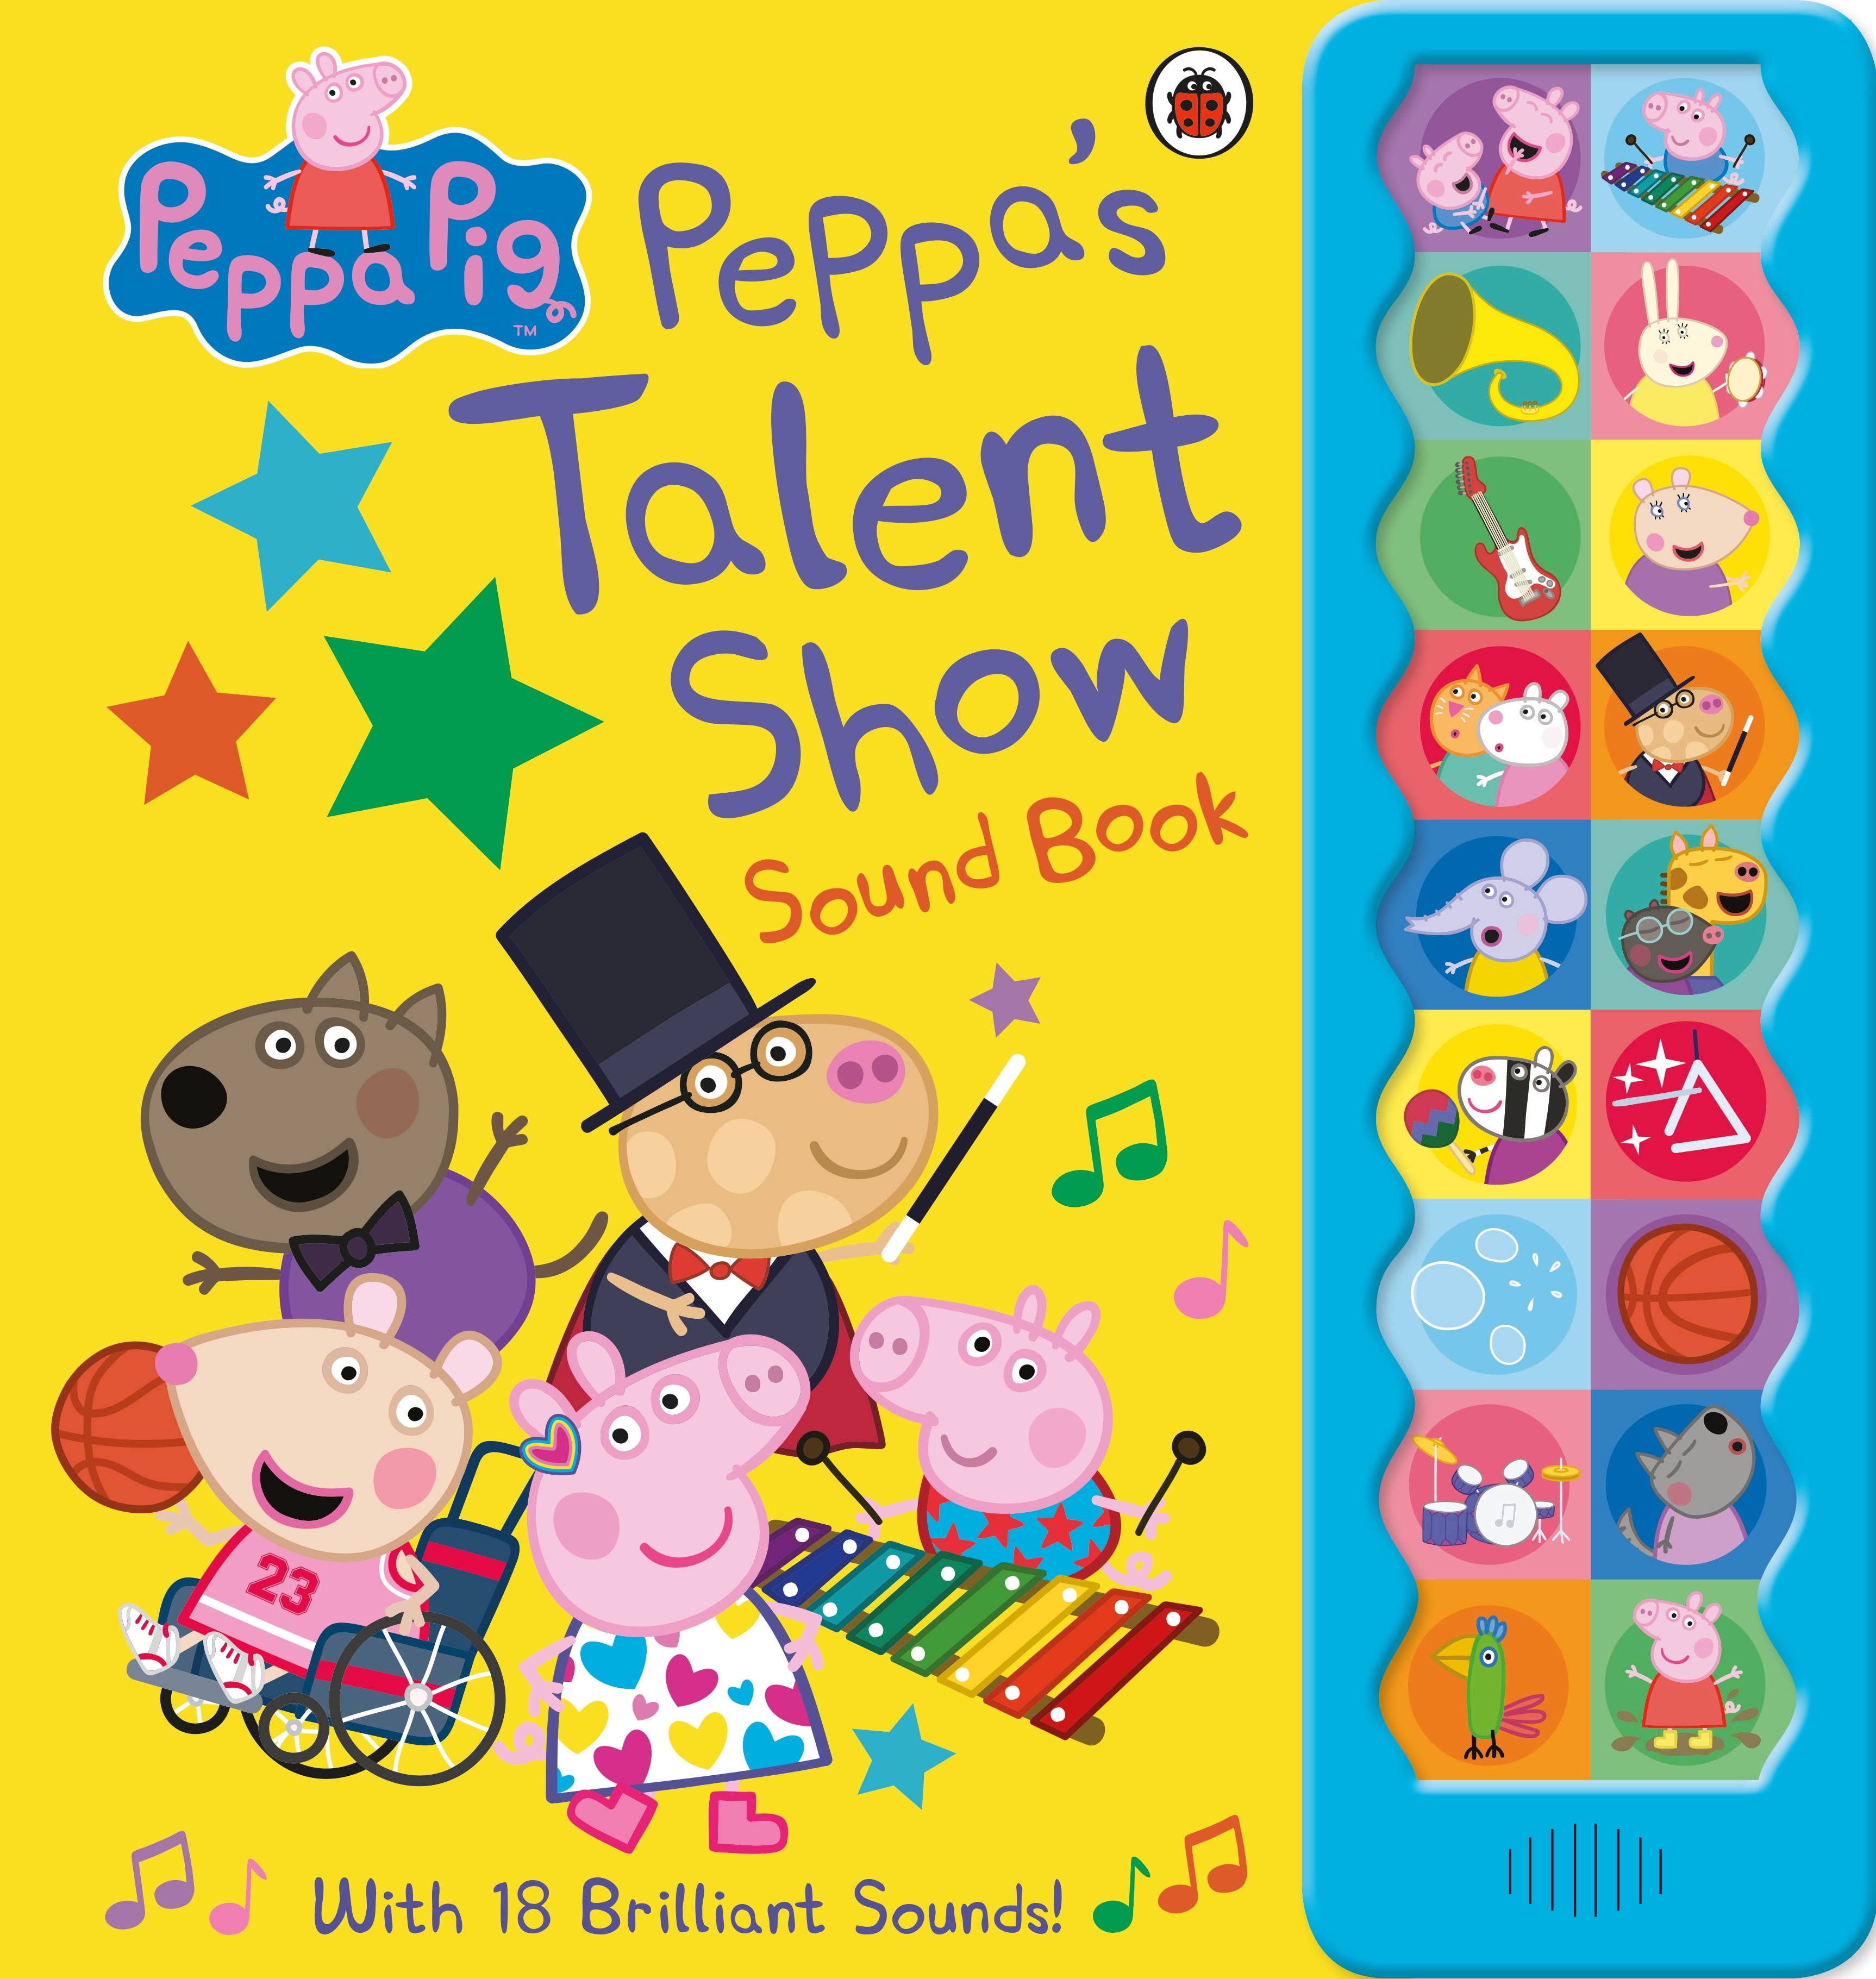 Book “Peppa Pig: Peppa's Talent Show” by Peppa Pig — November 25, 2021